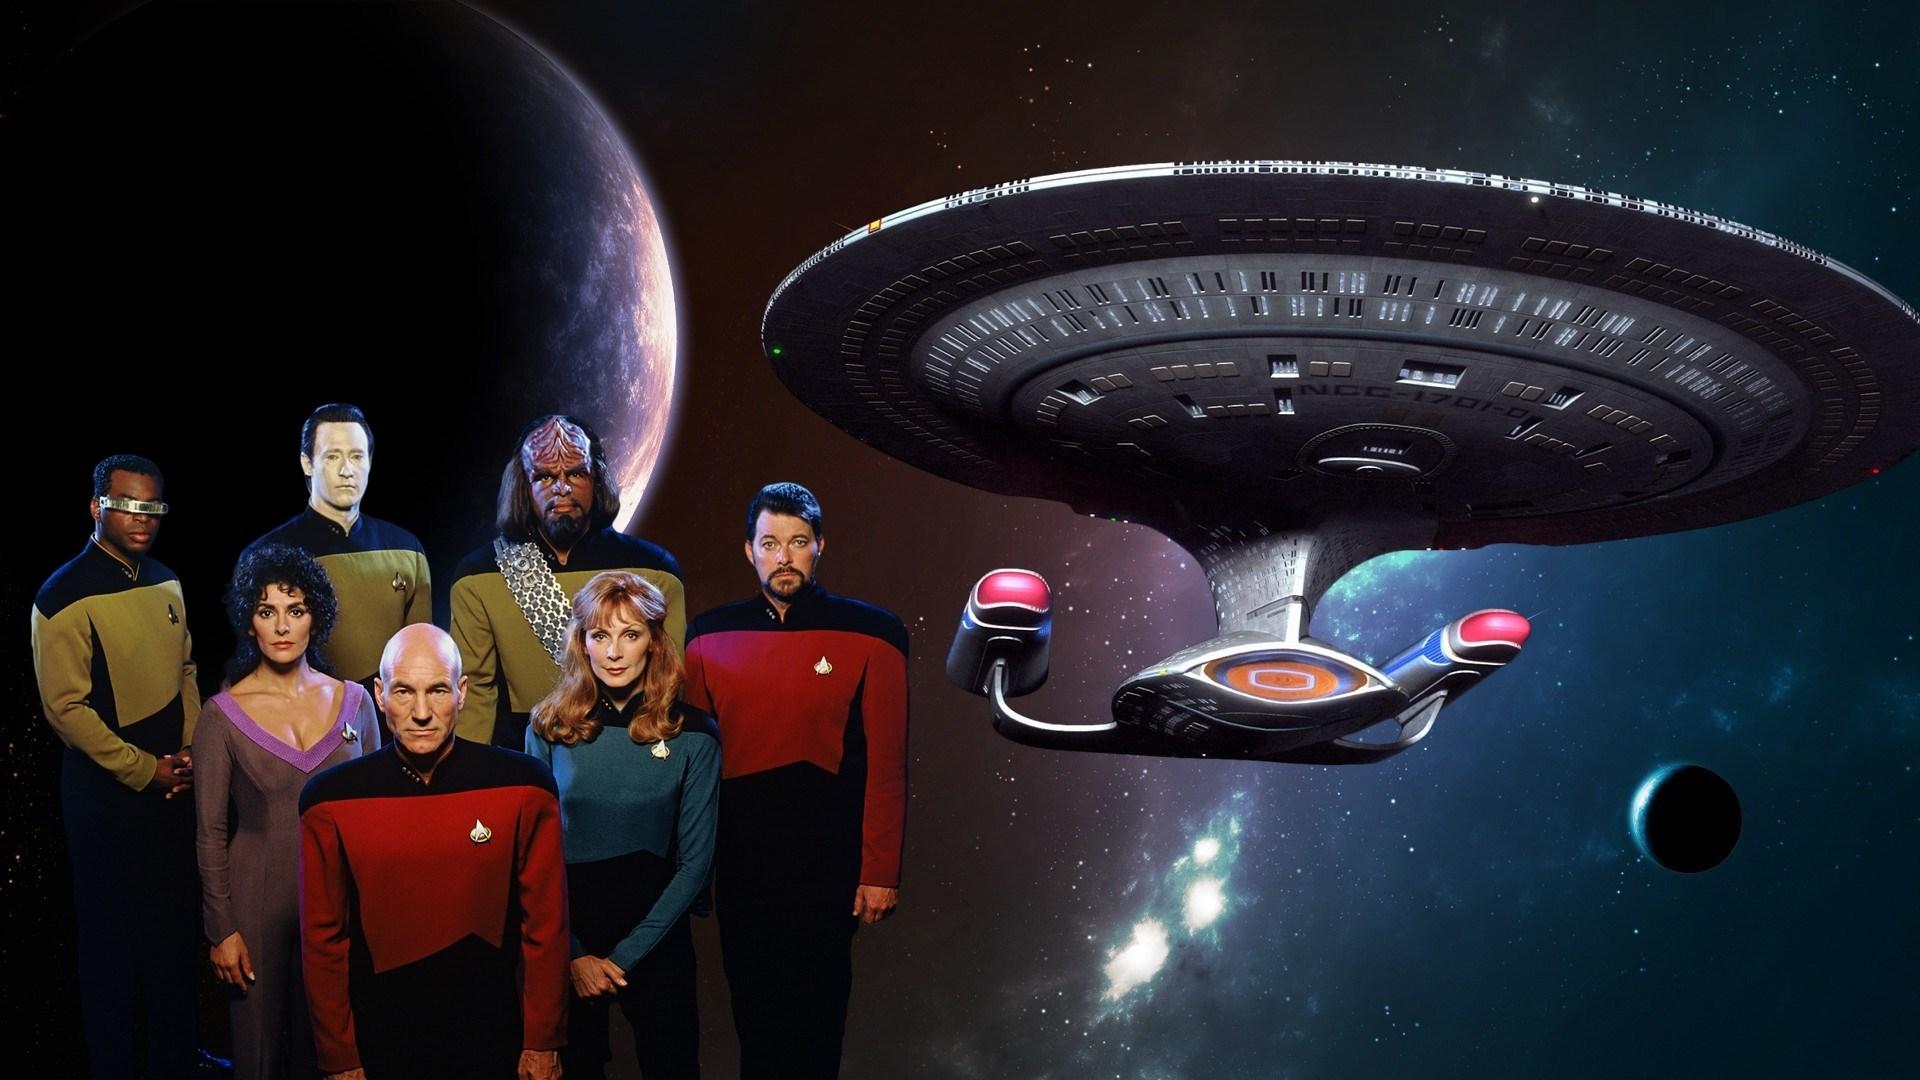 Star Trek: The Next Generation Wallpaper and Background